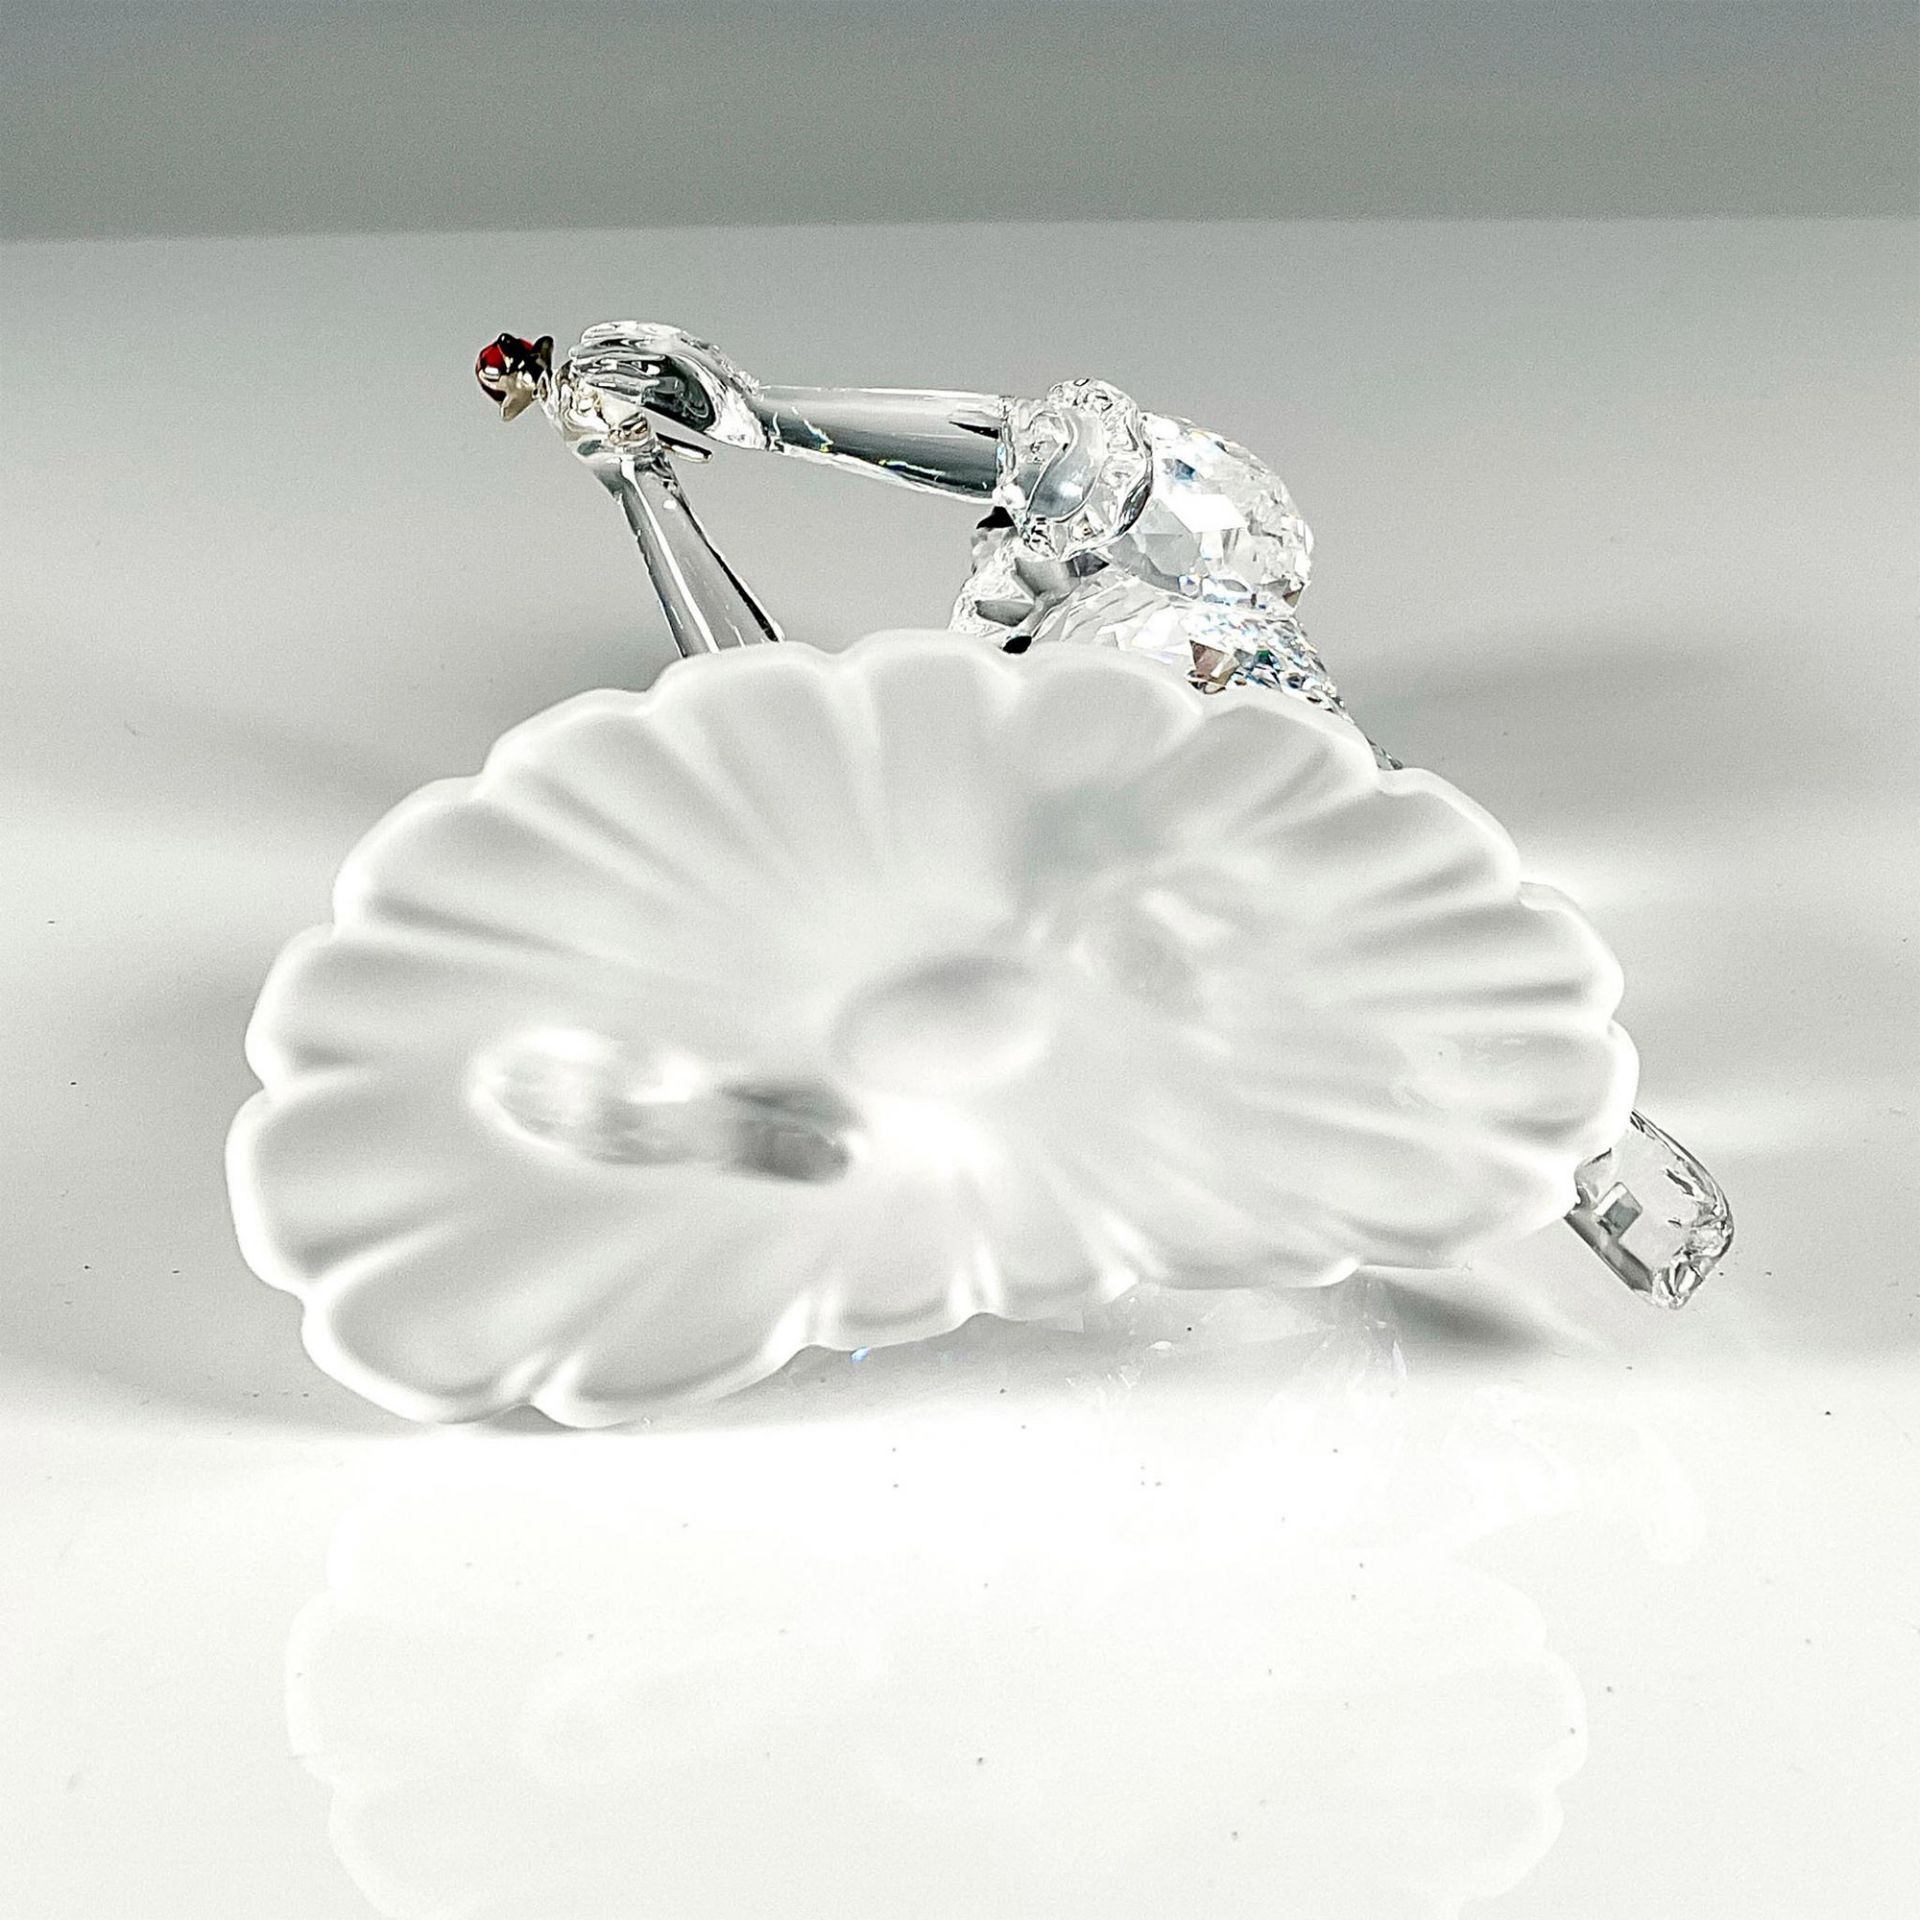 Swarovski Crystal Figurine, Harlequin - Image 3 of 4